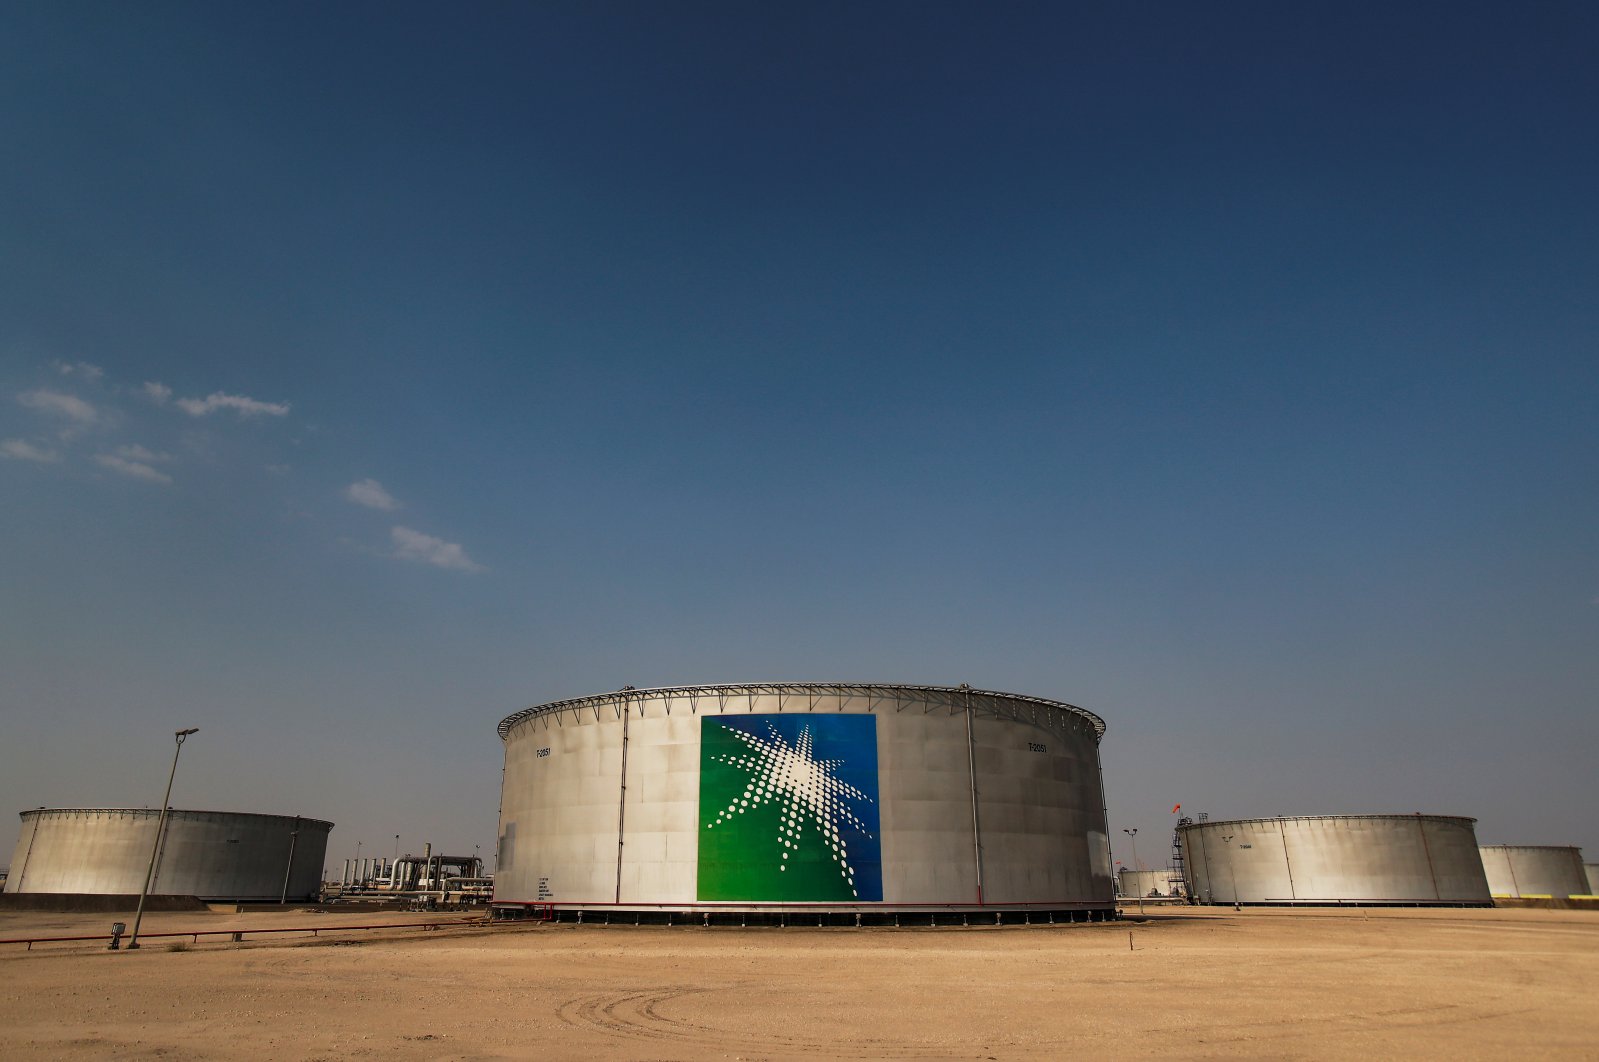 A view shows branded oil tanks at Saudi Aramco oil facility in Abqaiq, Saudi Arabia, Saturday, October 12, 2019. (Reuters Photo)